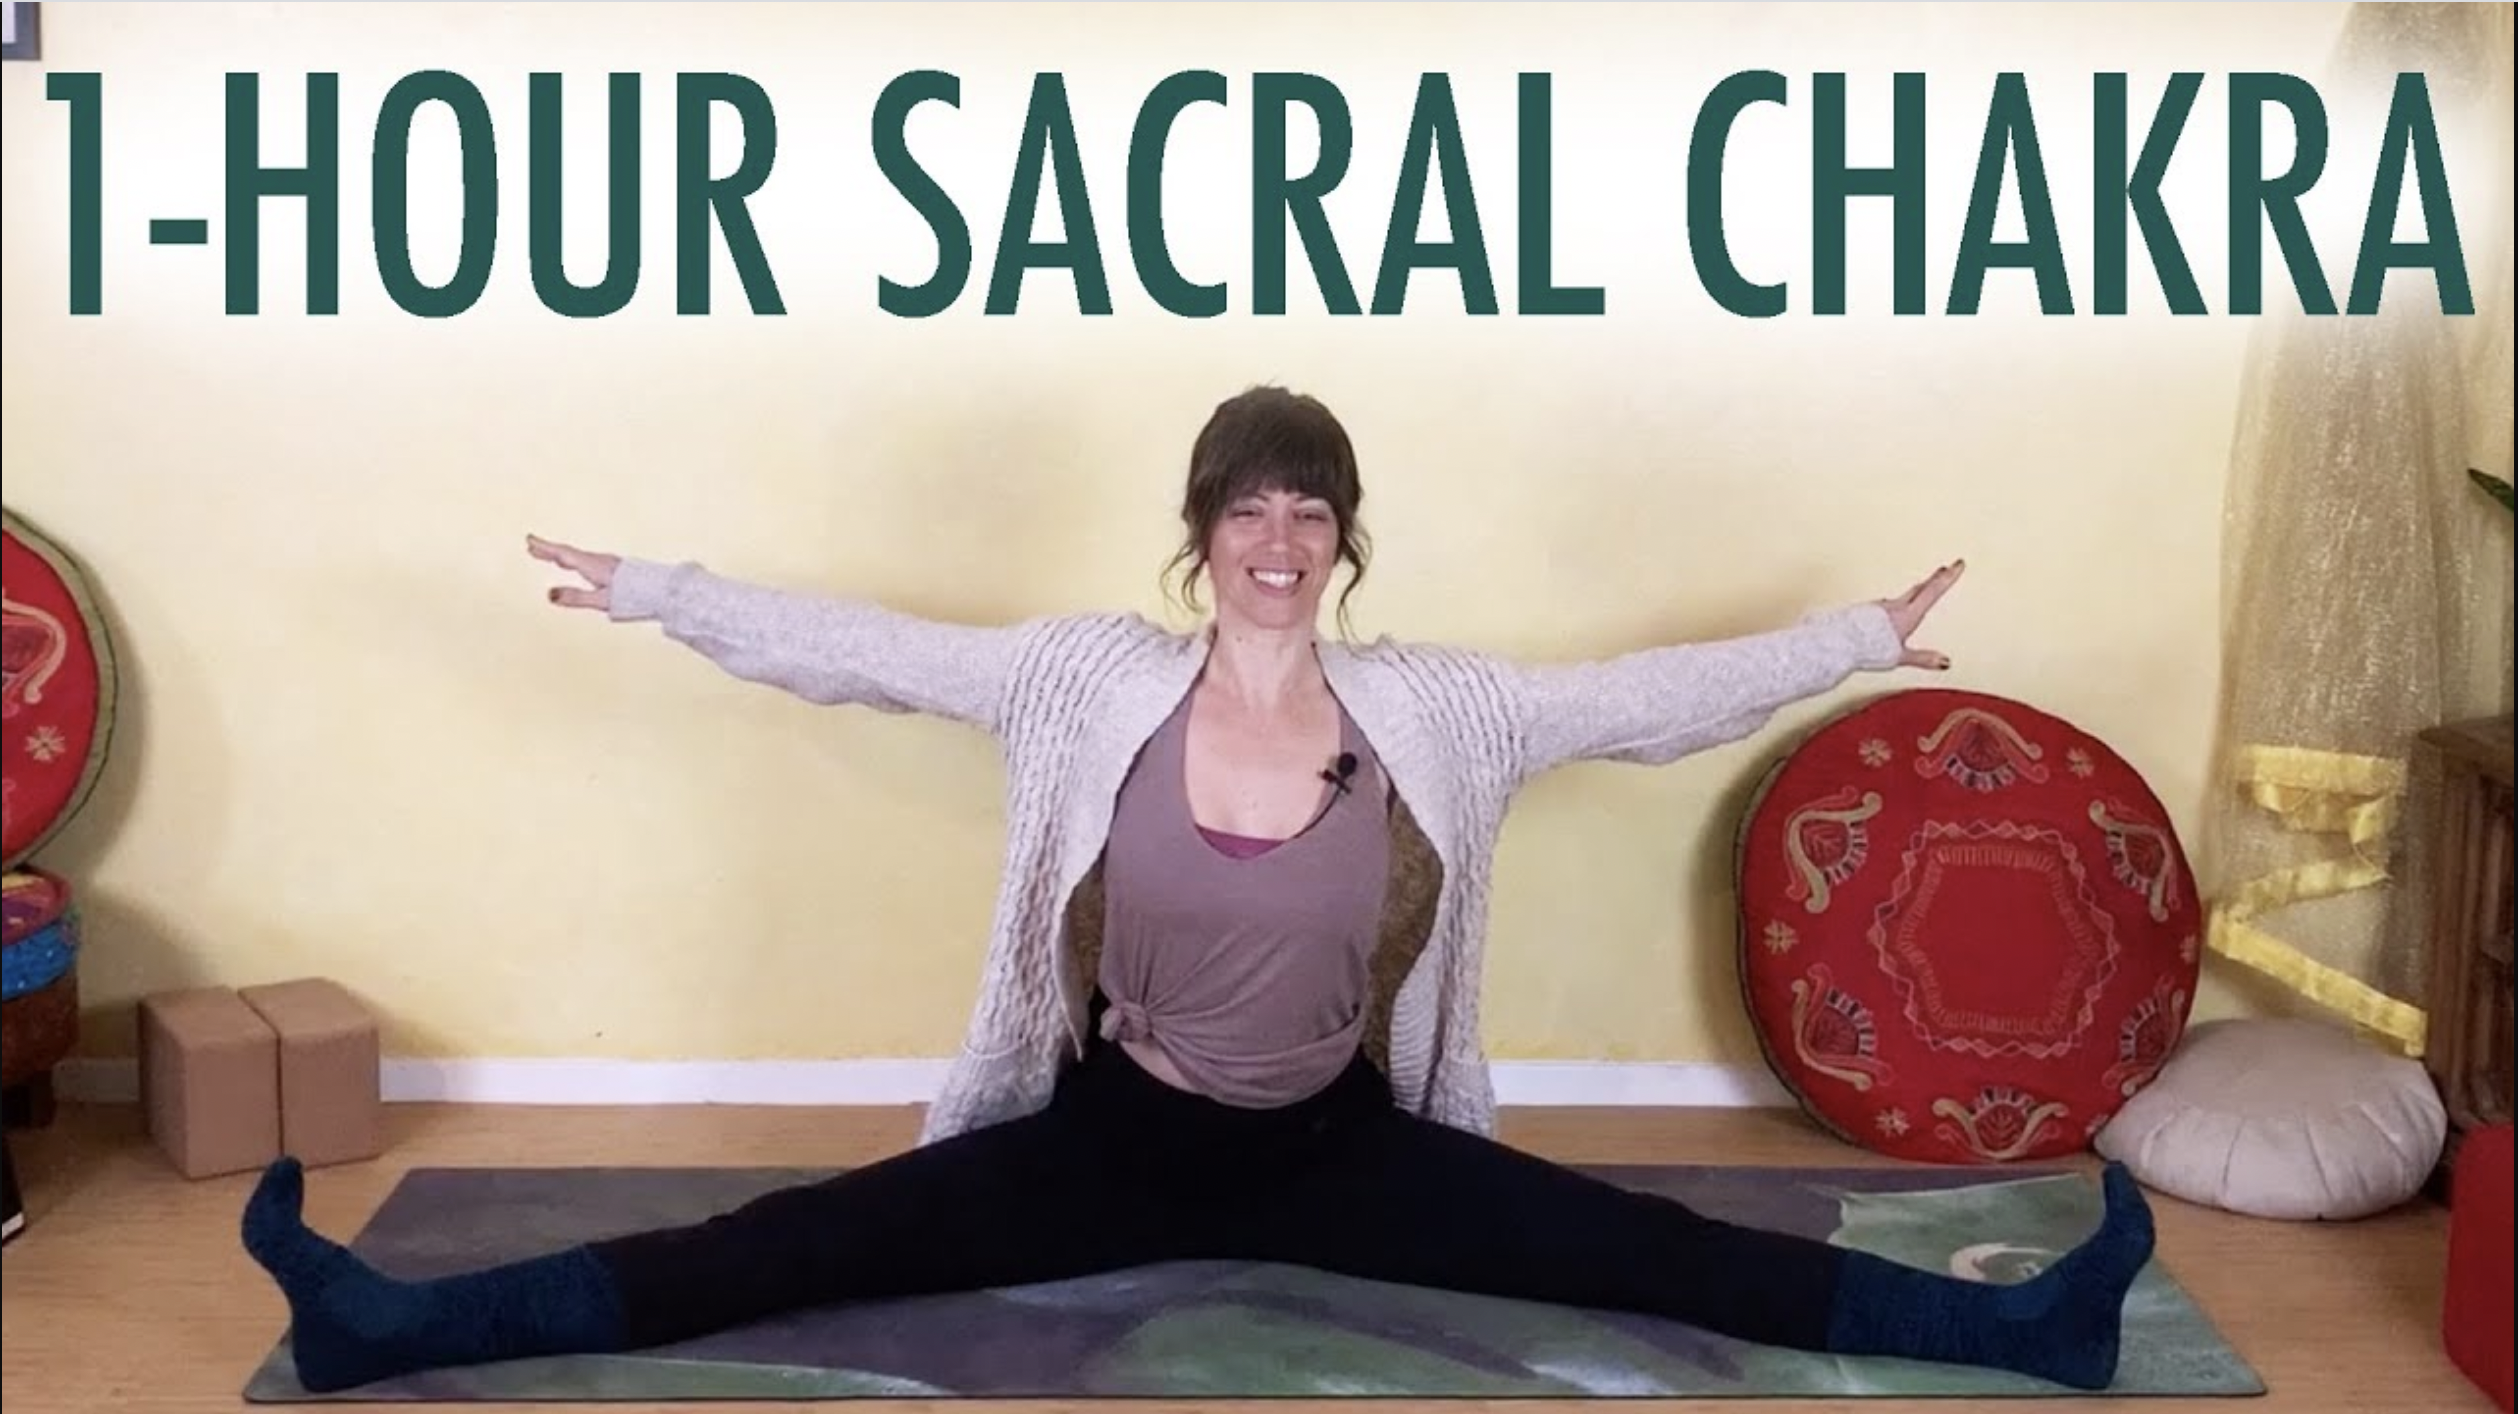 5 Best Sacral Chakra Yoga Poses for Balancing Emotions